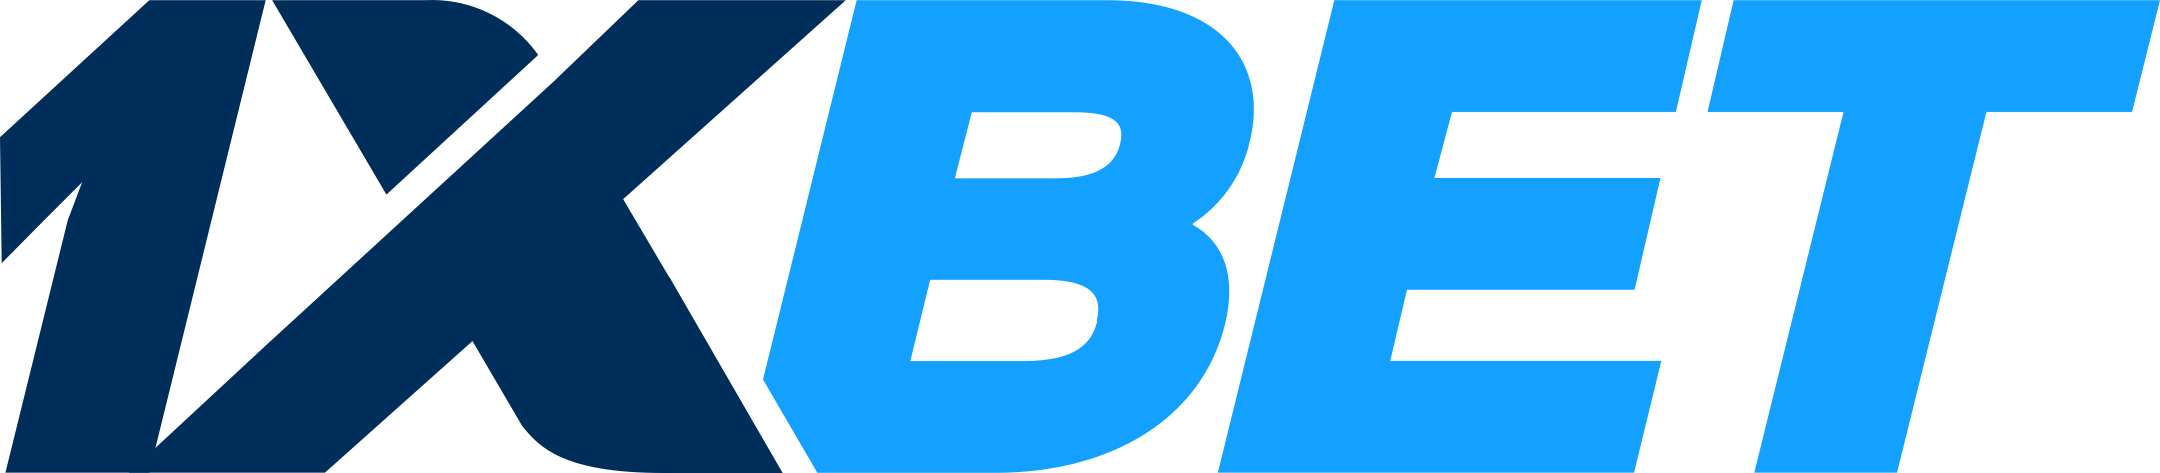 1xbet logo 1 - 1XBET Logo